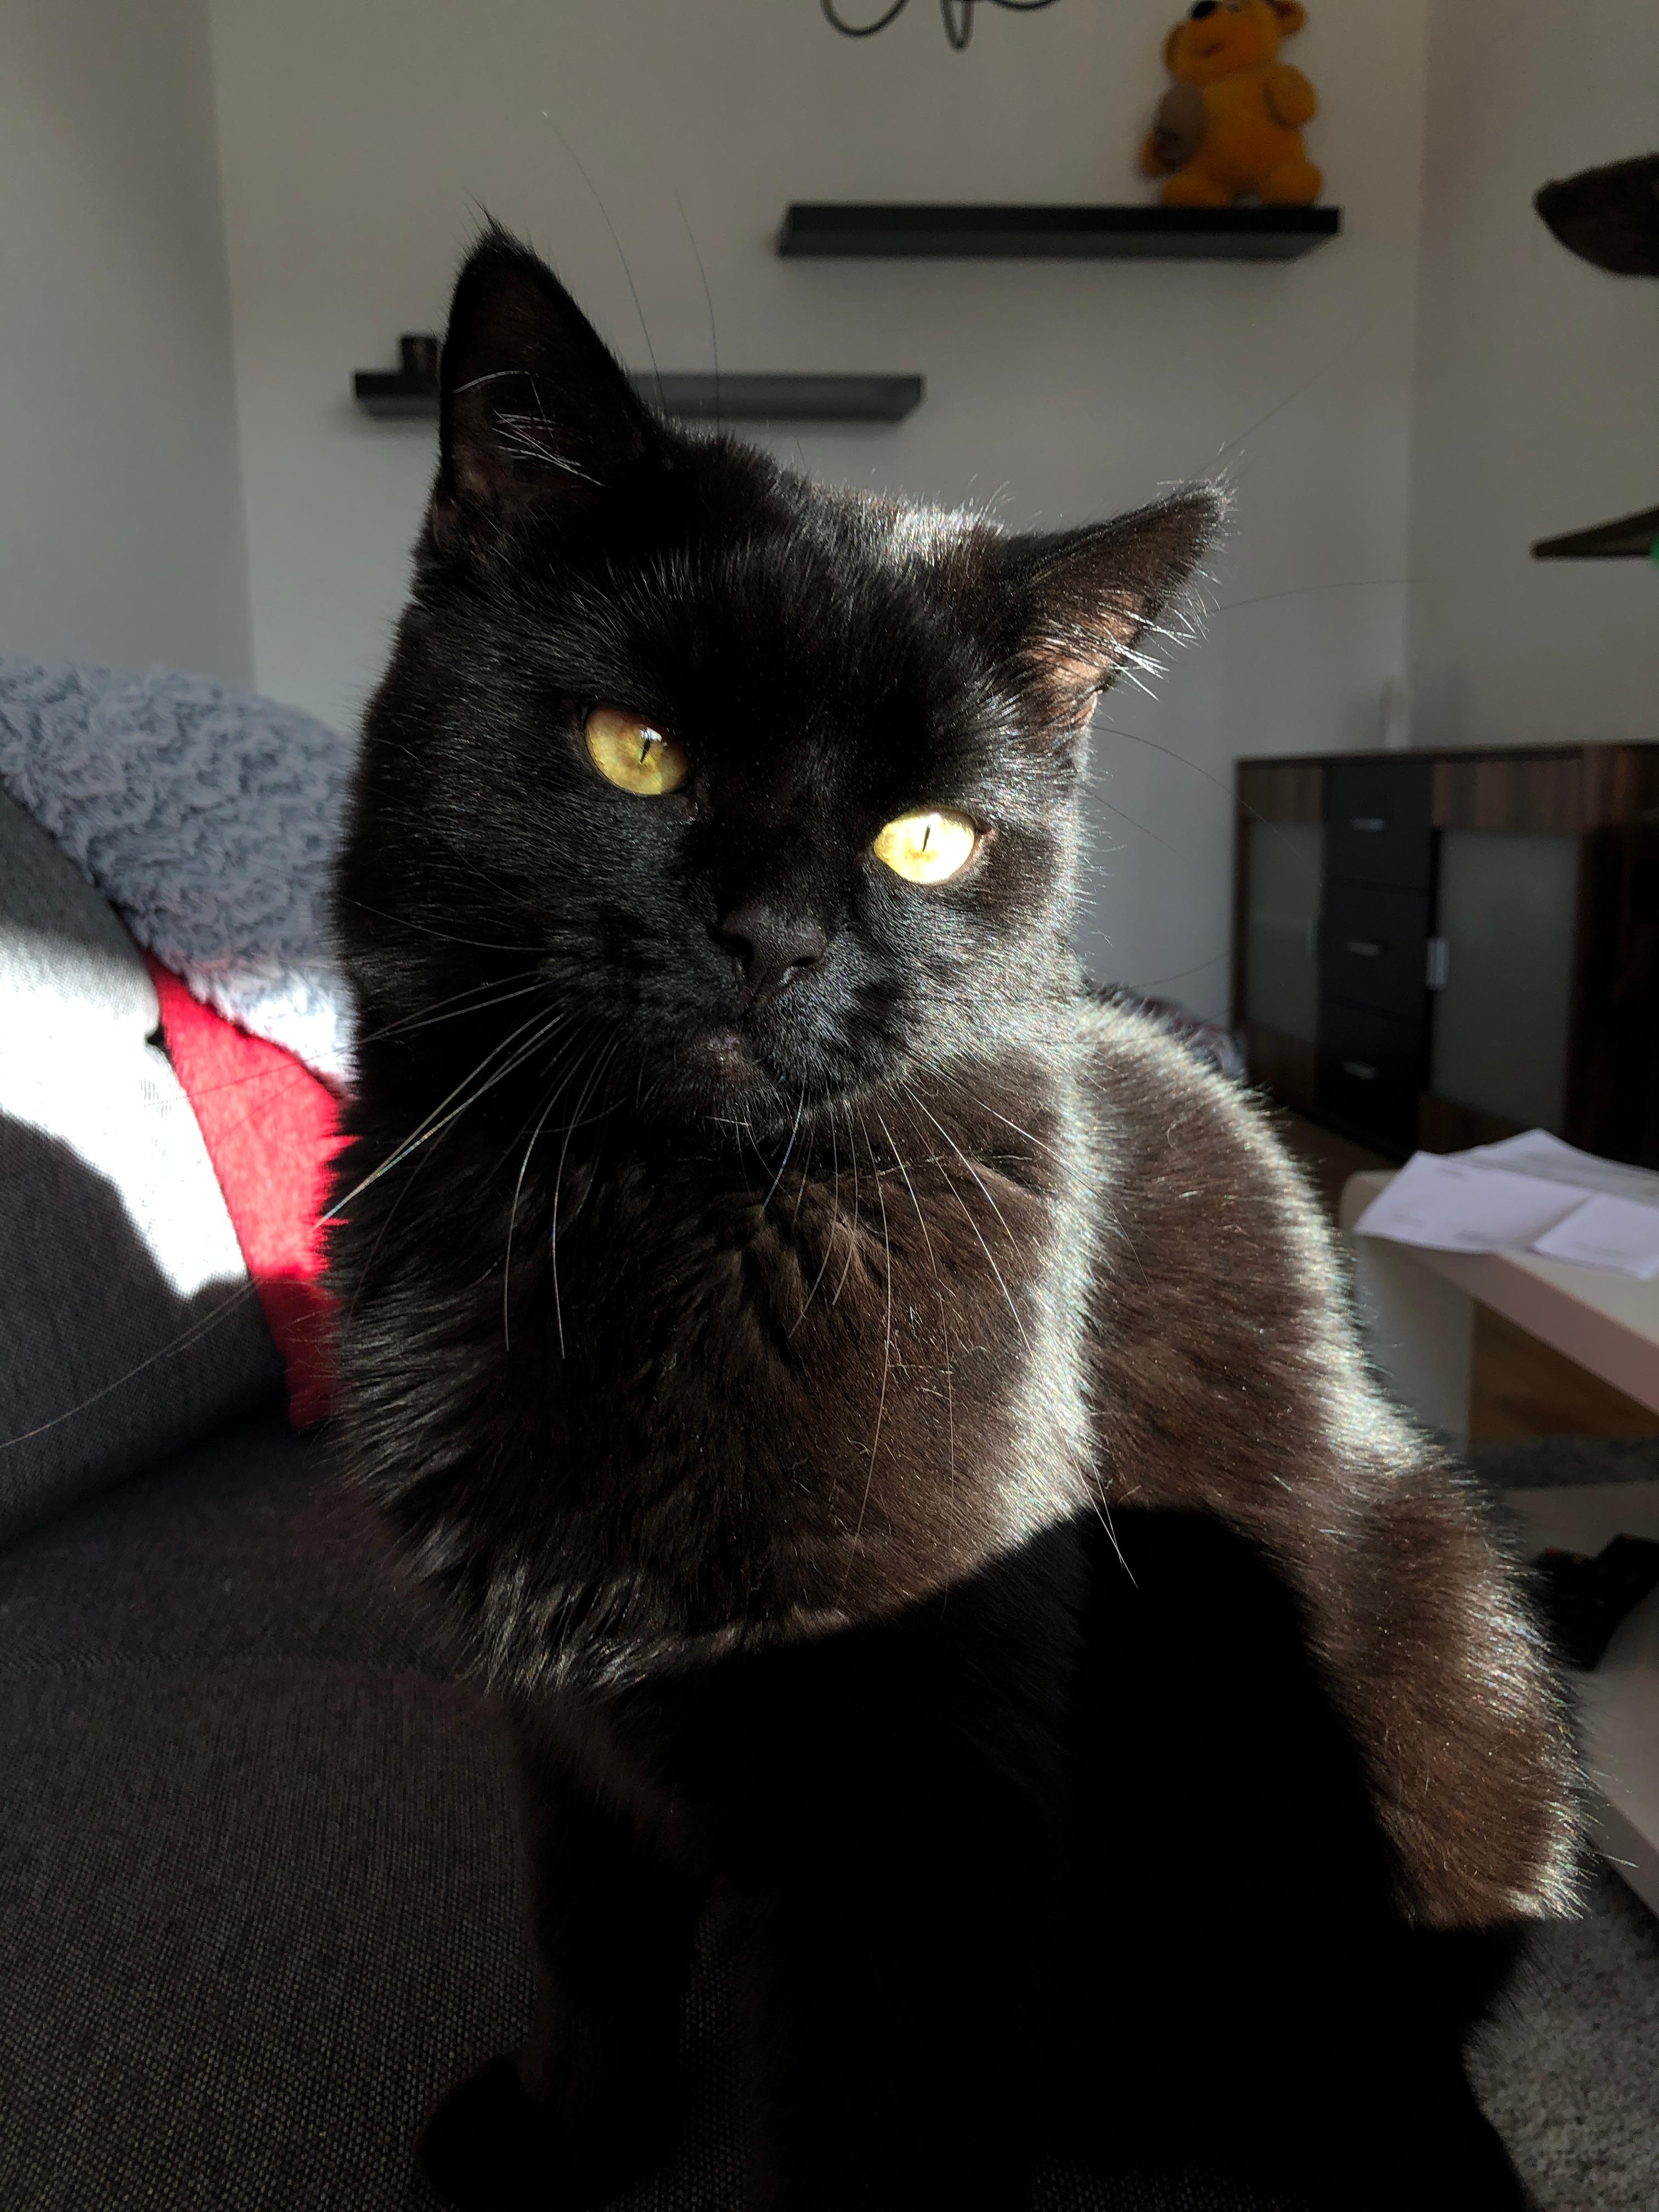 Mein kleines Model 🐱 #blackcat #haustier #katze #schwarz #schwarzekatze #Kater #cat #furbaby #augen #katzenaugen #sonne